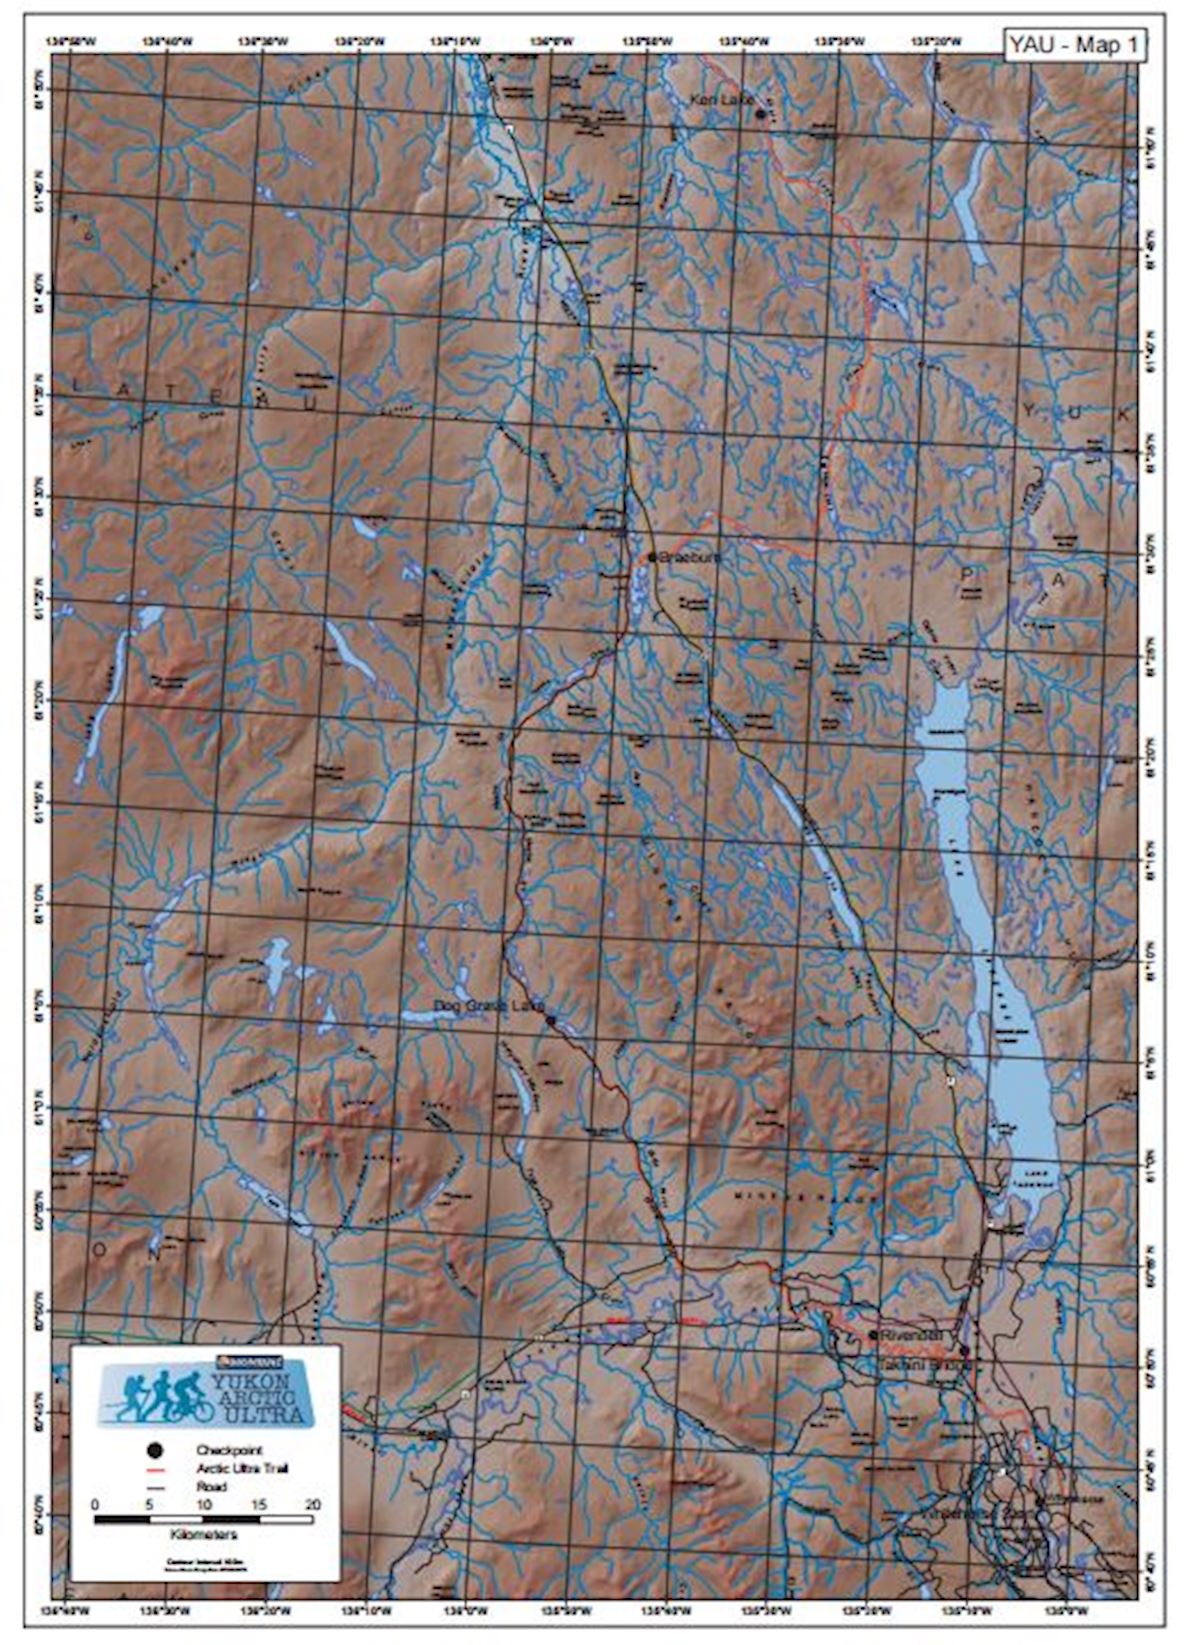 Yukon Arctic Ultra MAPA DEL RECORRIDO DE